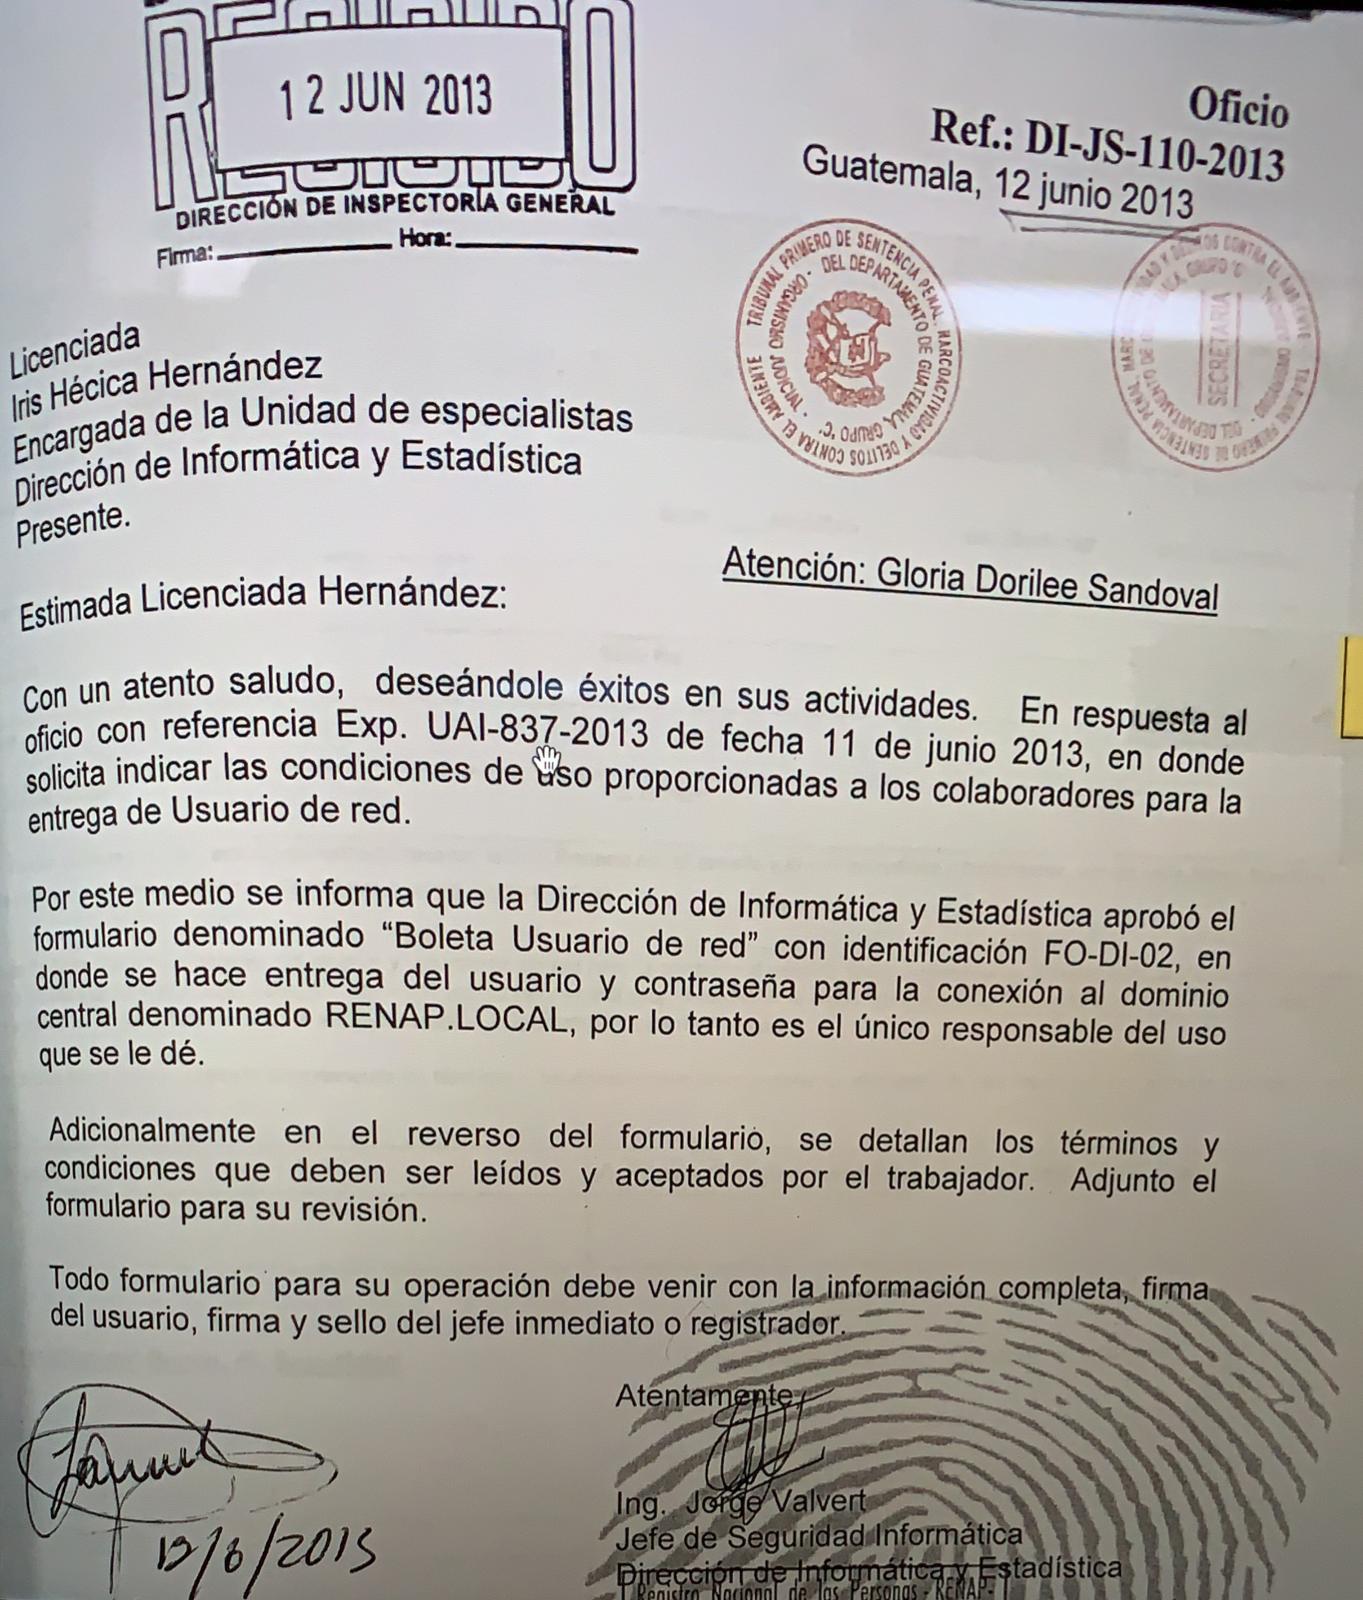 El informe firmado por Jorge Rafael Valert Gamboa